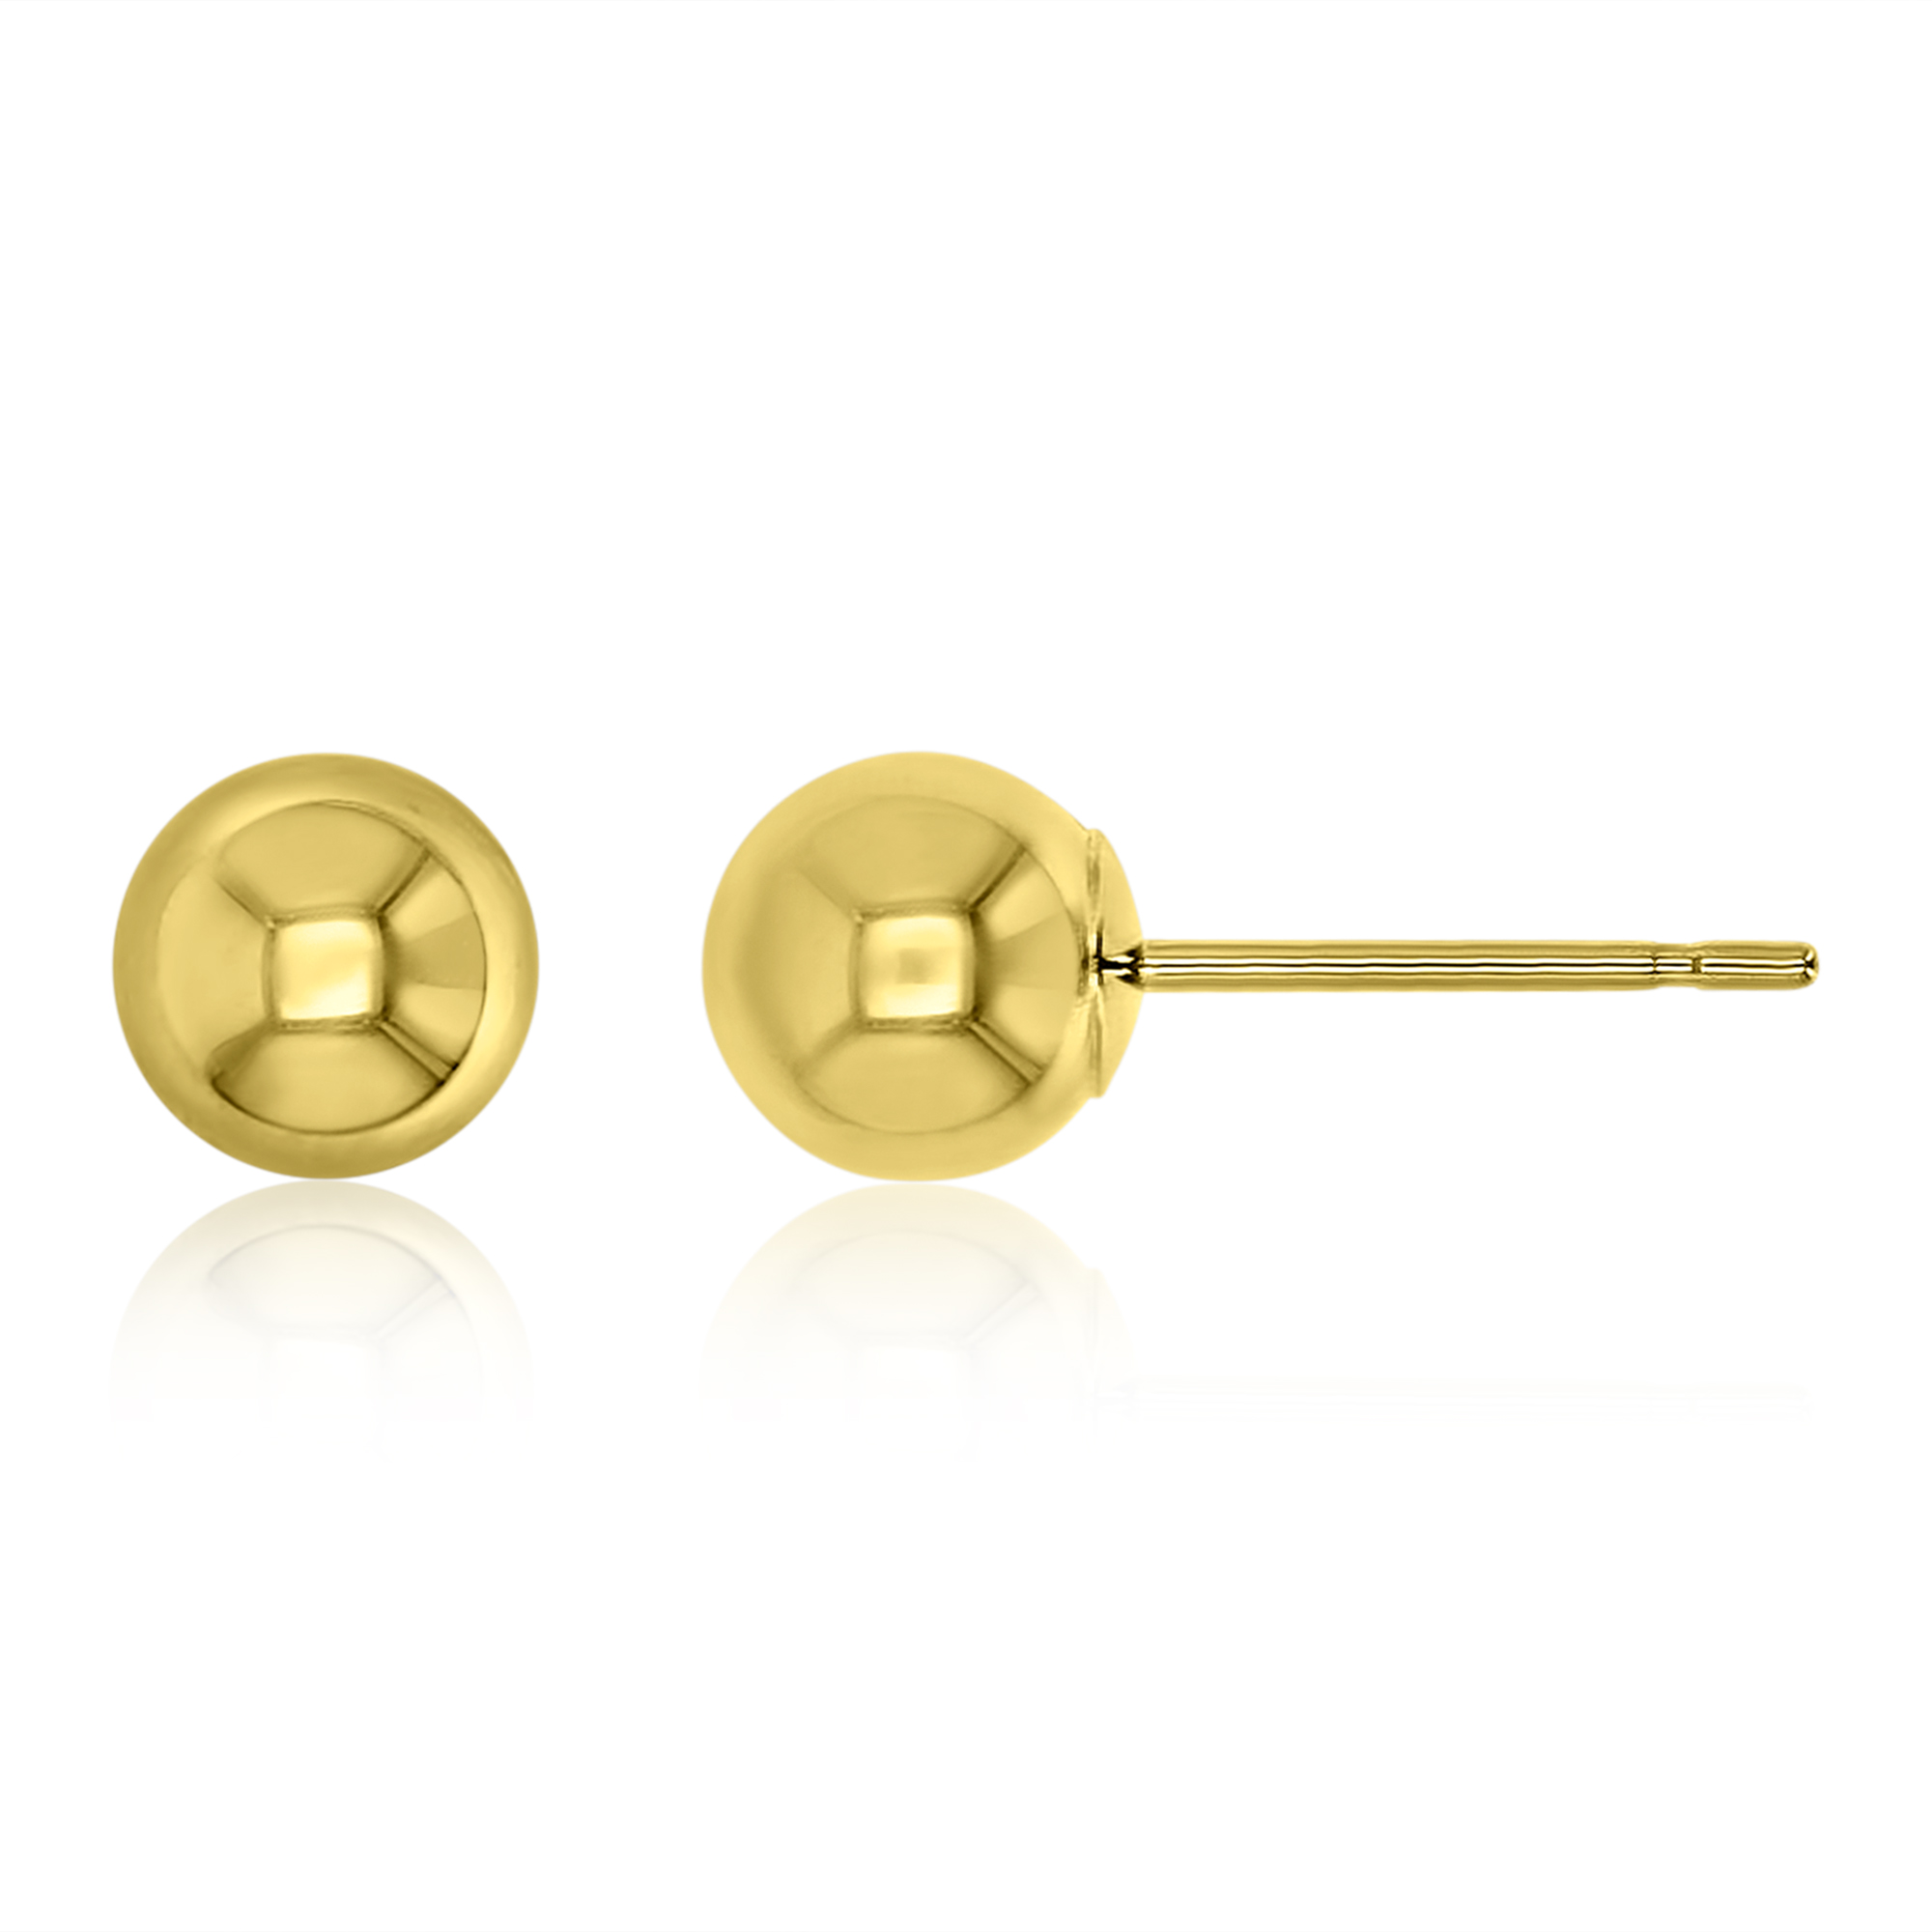 10K Yellow Gold 5mm Ball Stud Earring